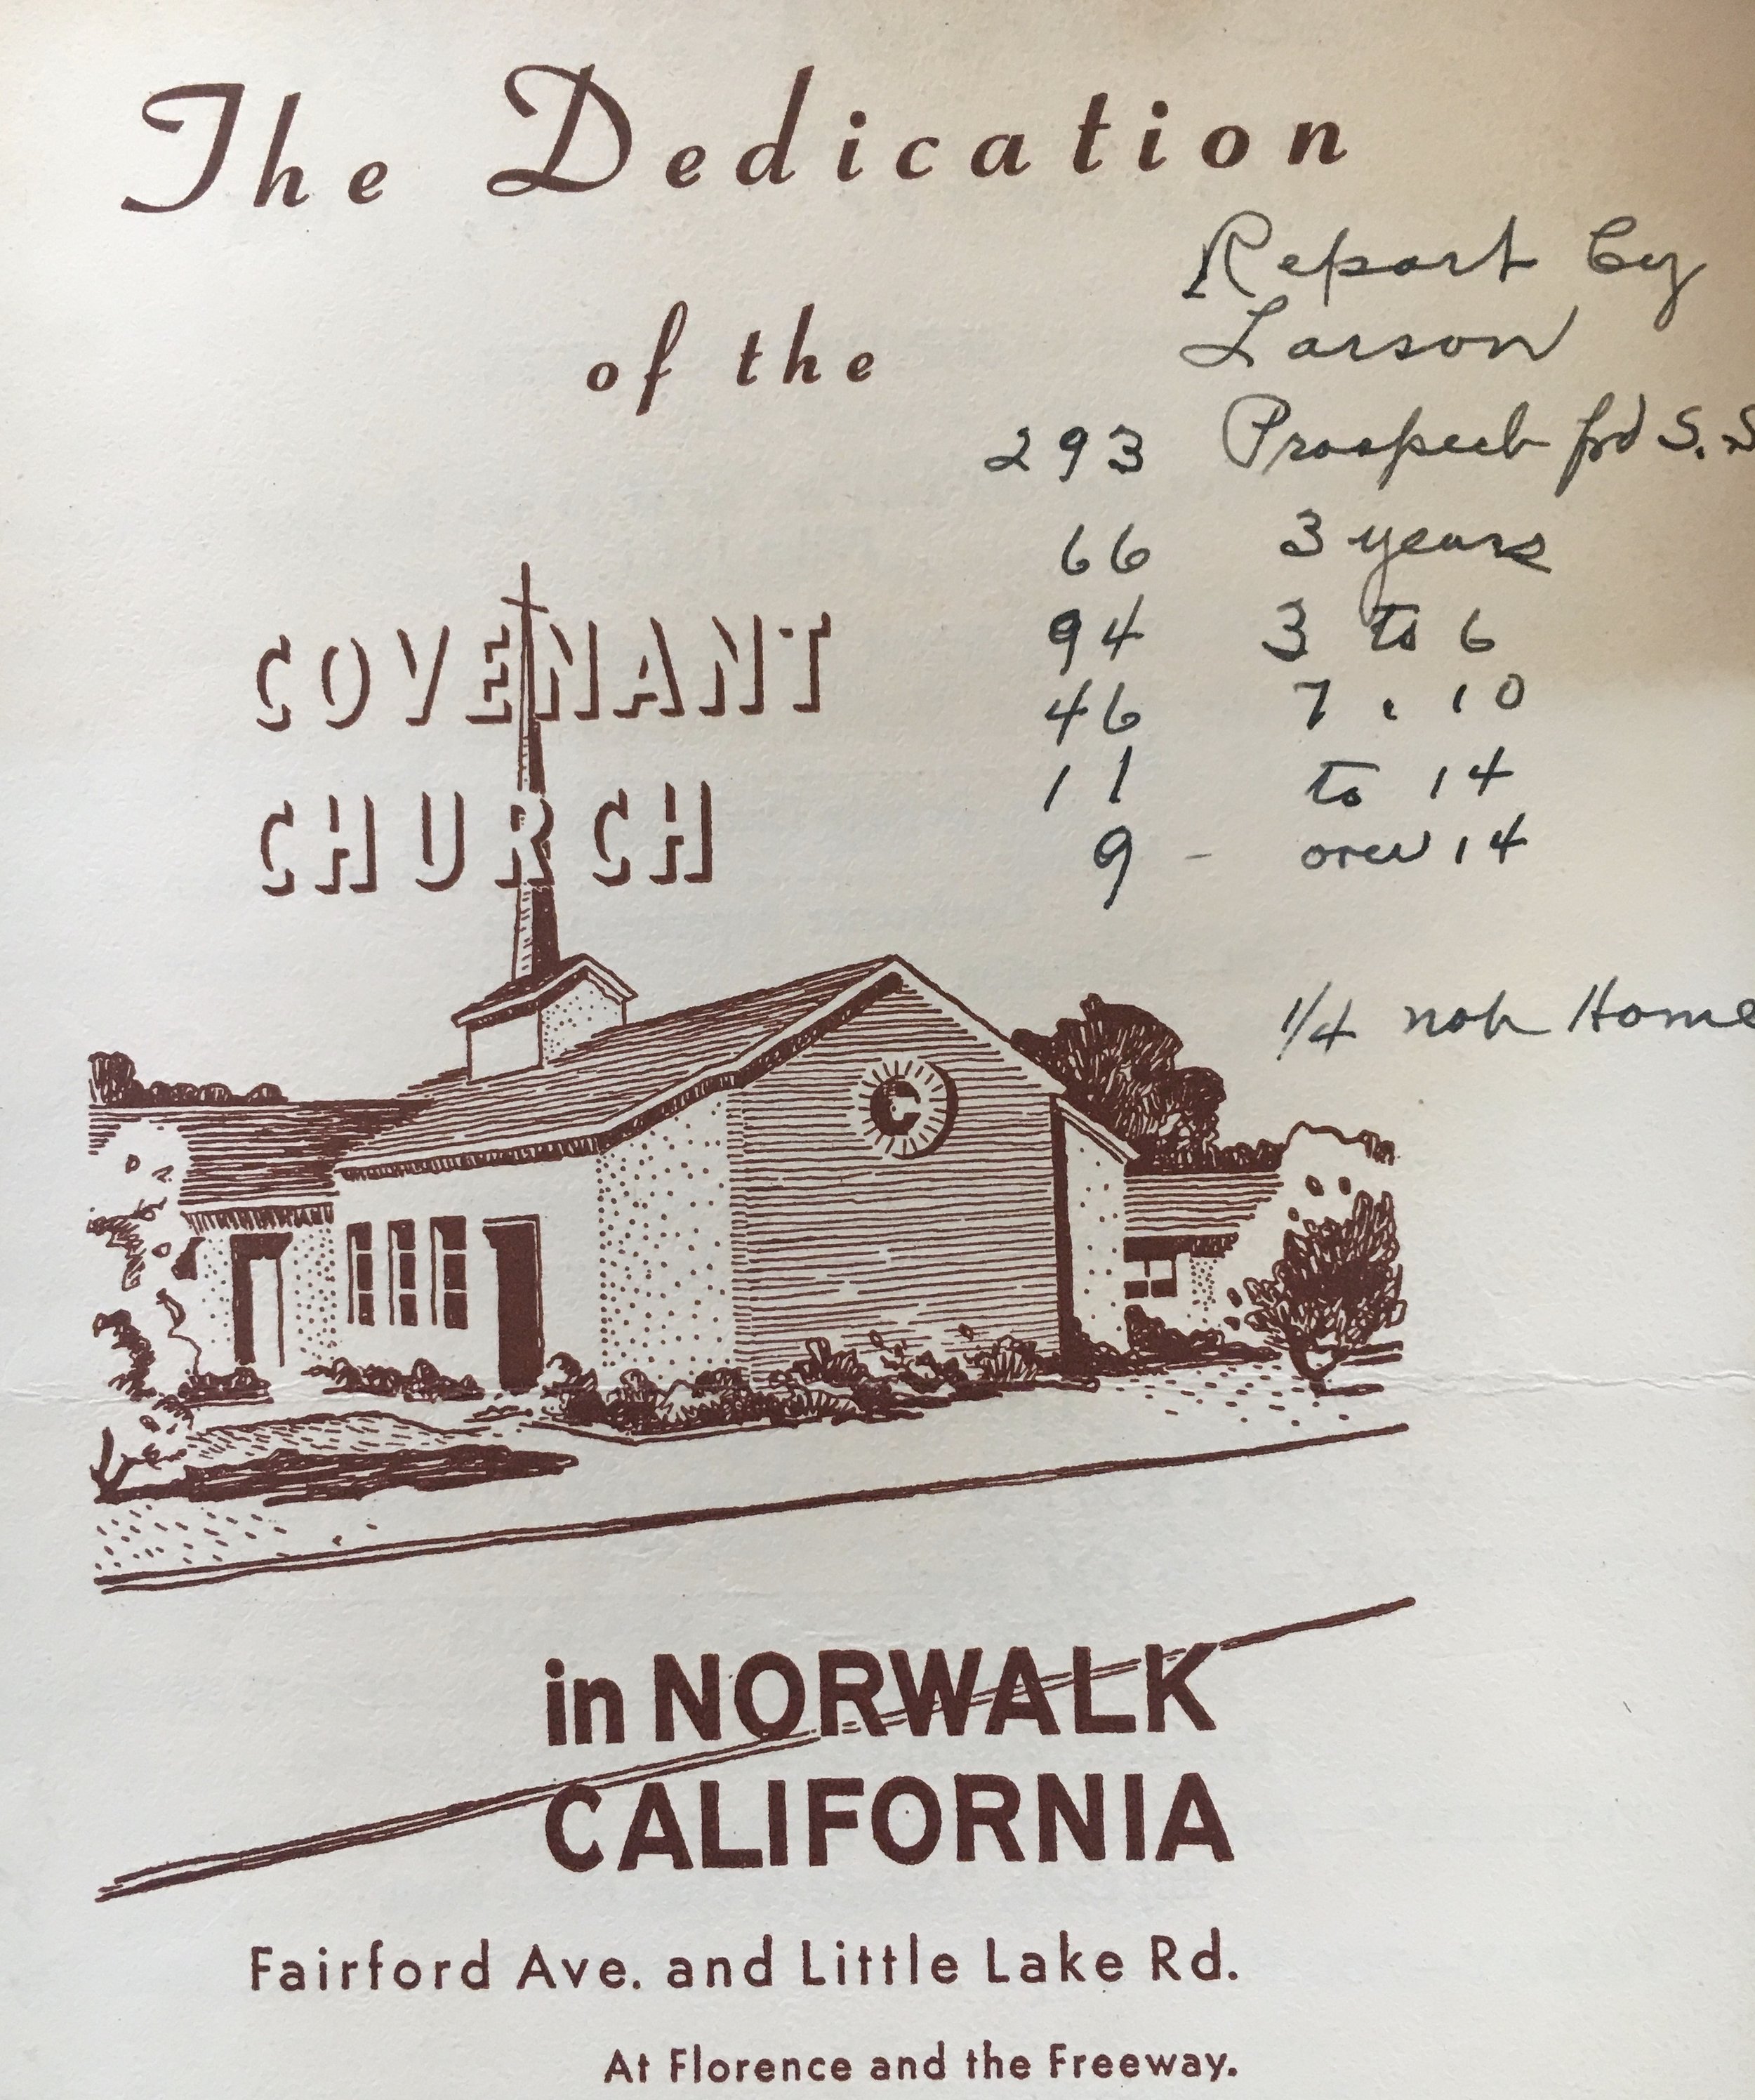 Dedication of new church in Norwalk